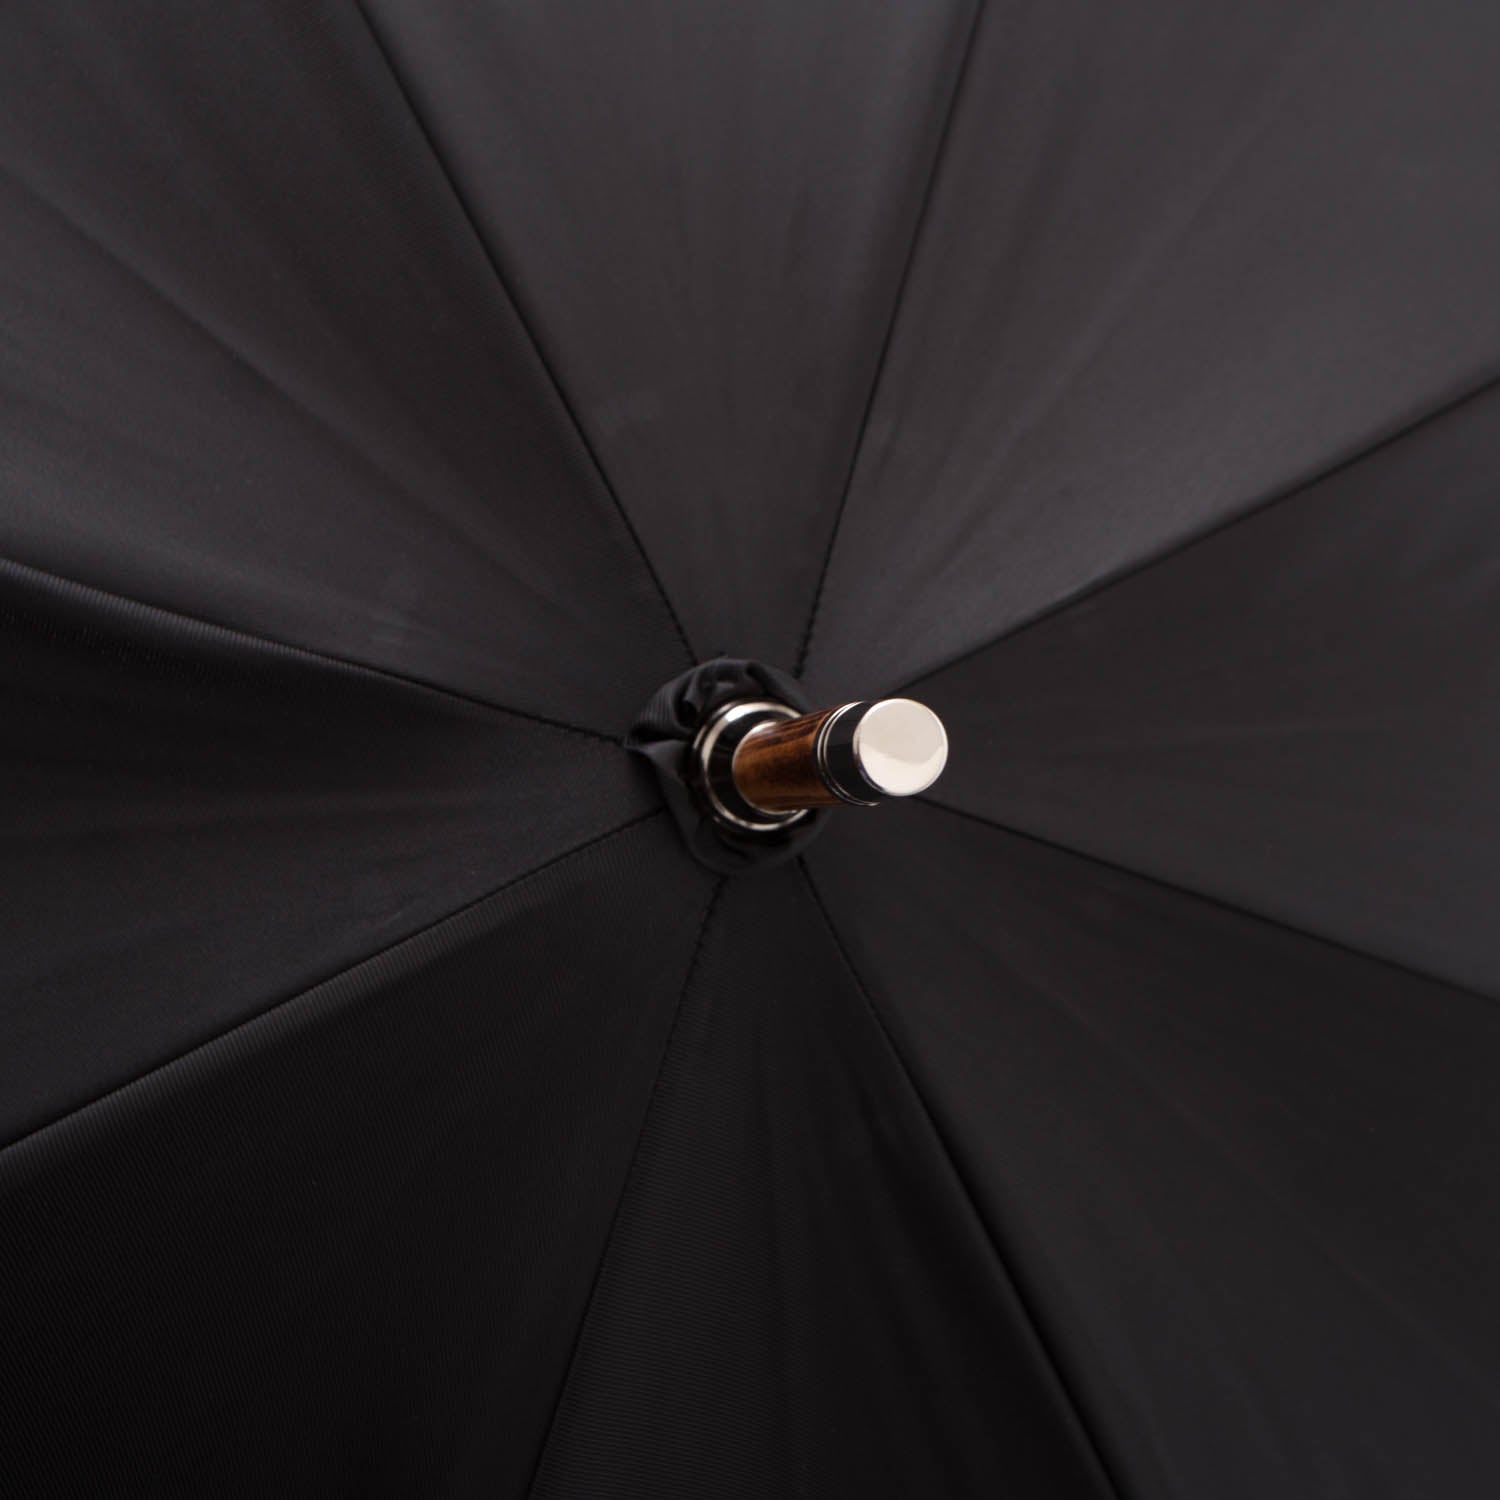 A close up of a KirbyAllison.com Black Doorman Umbrella with Malacca handle.